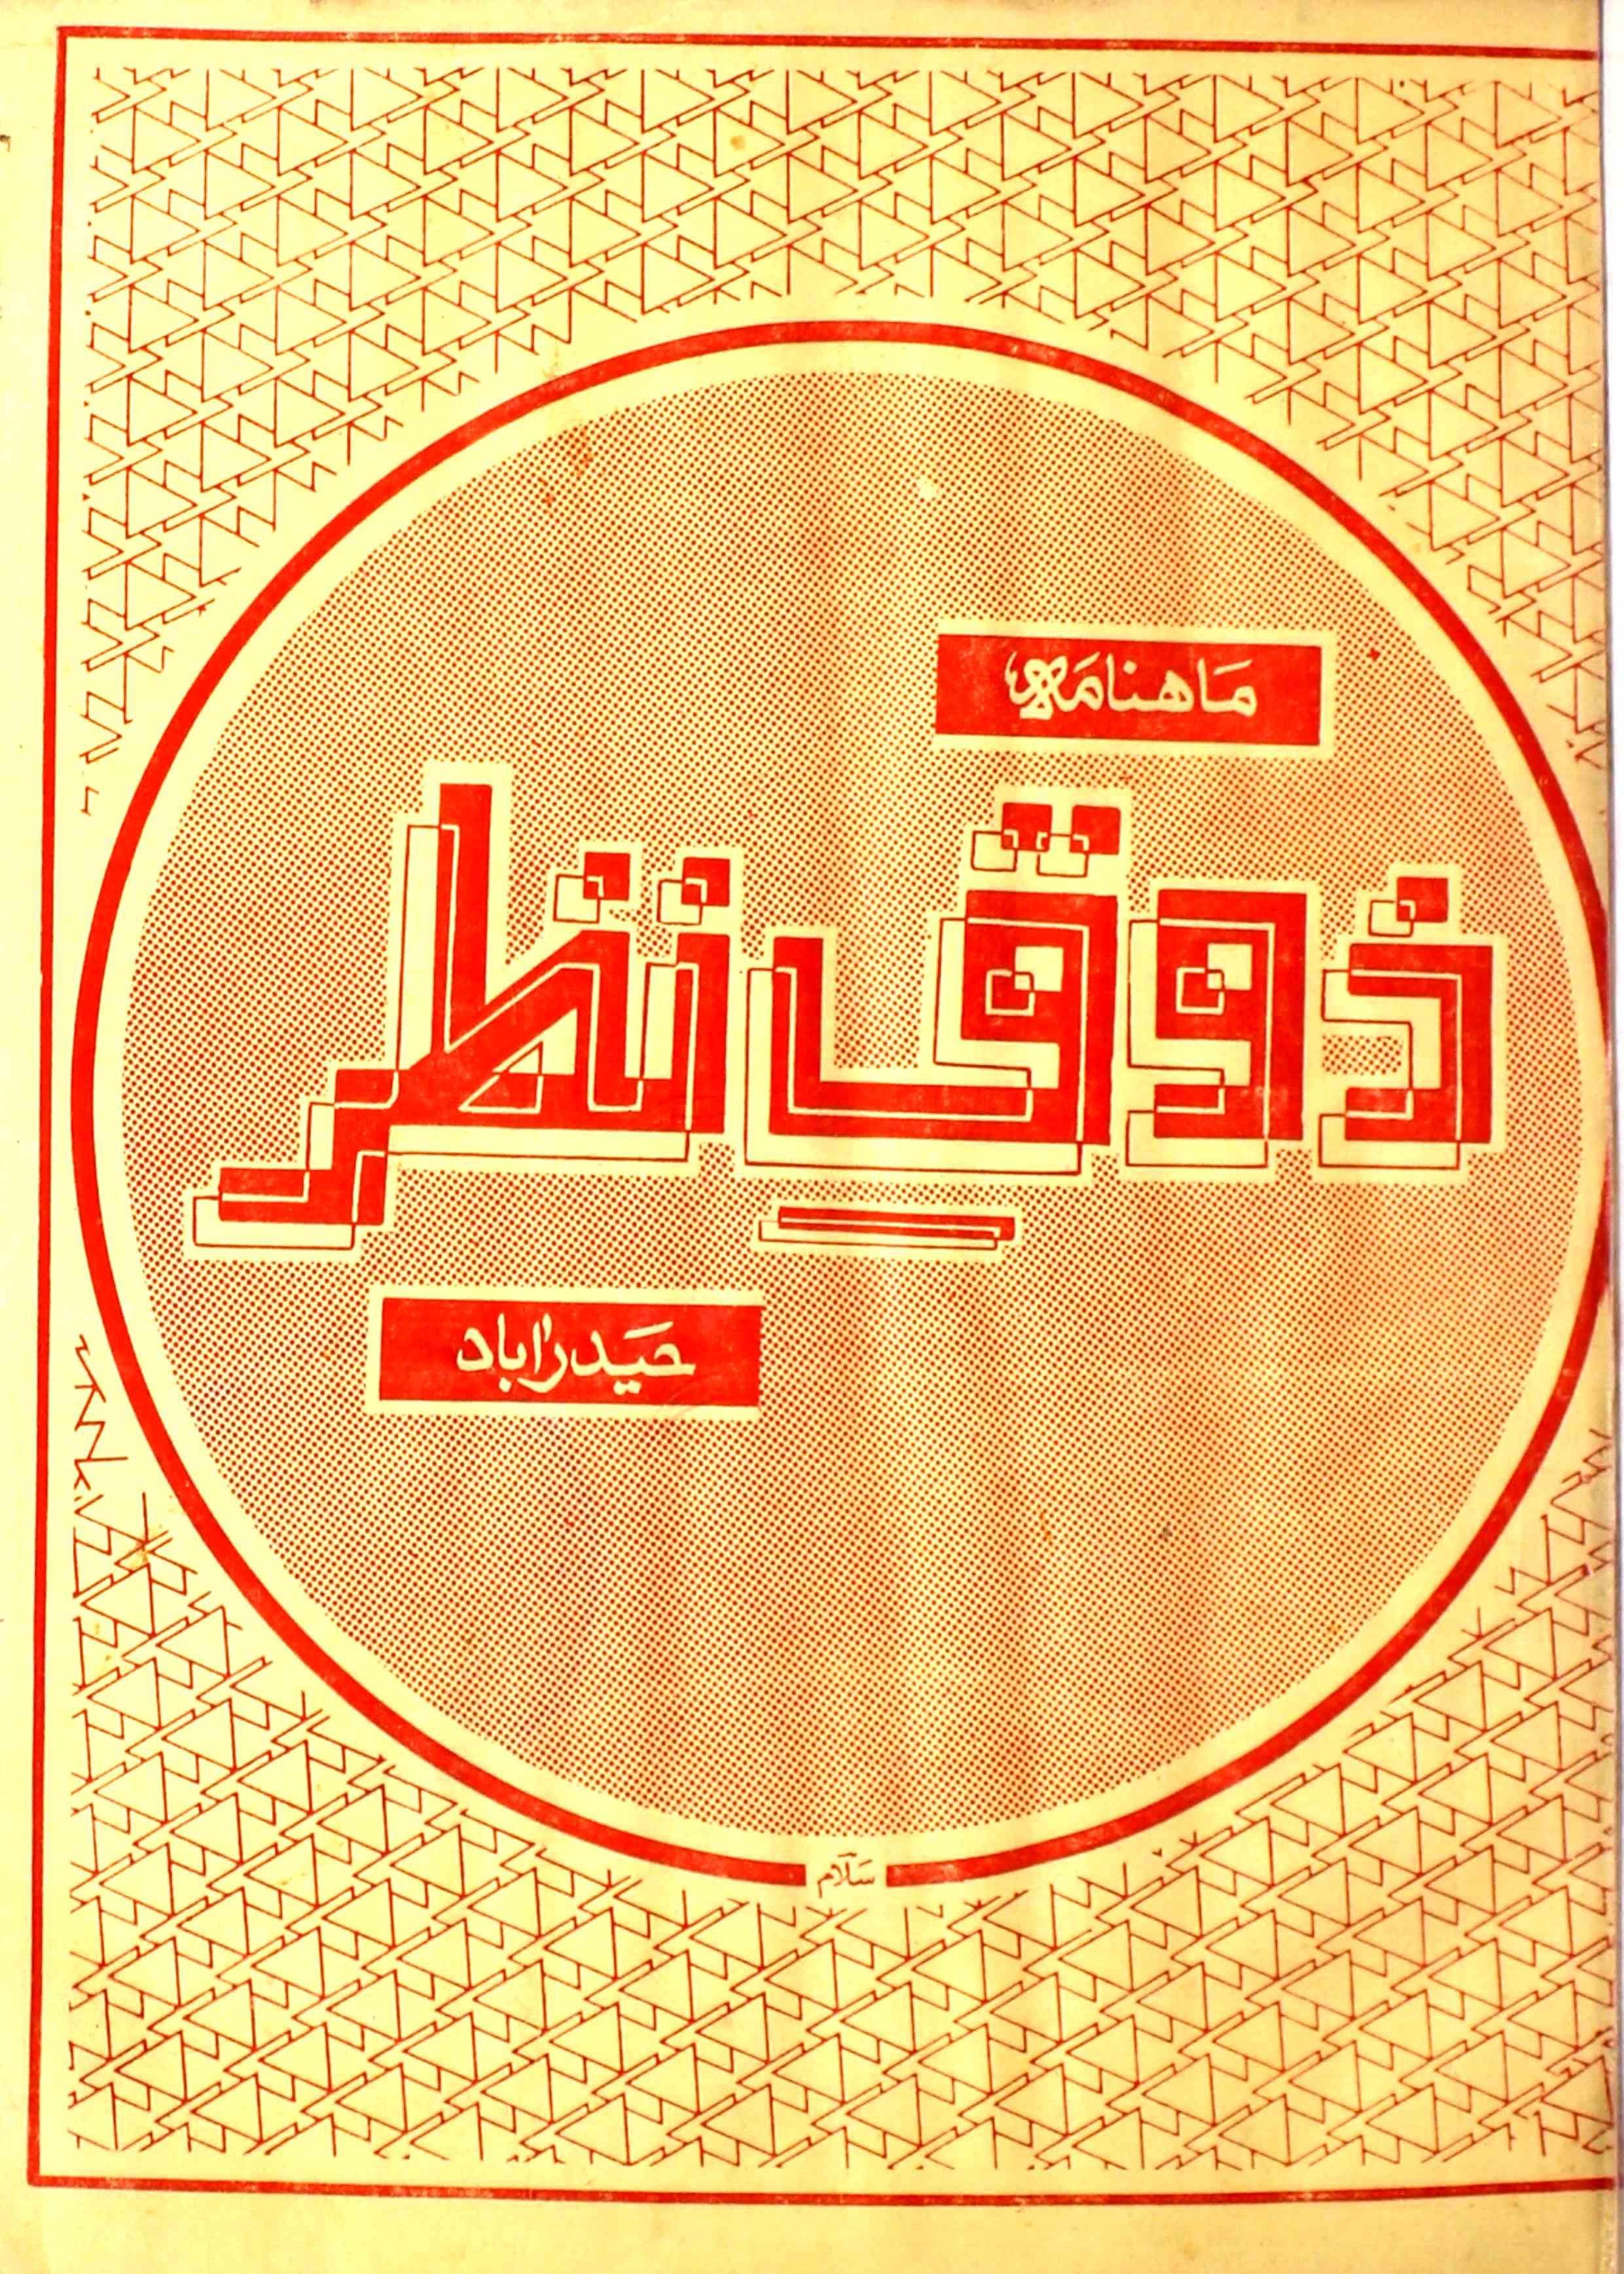 Zauq E Nazar Jild 1 Shumara 5,6 June 1985-Svk-Shumara Number-005,006